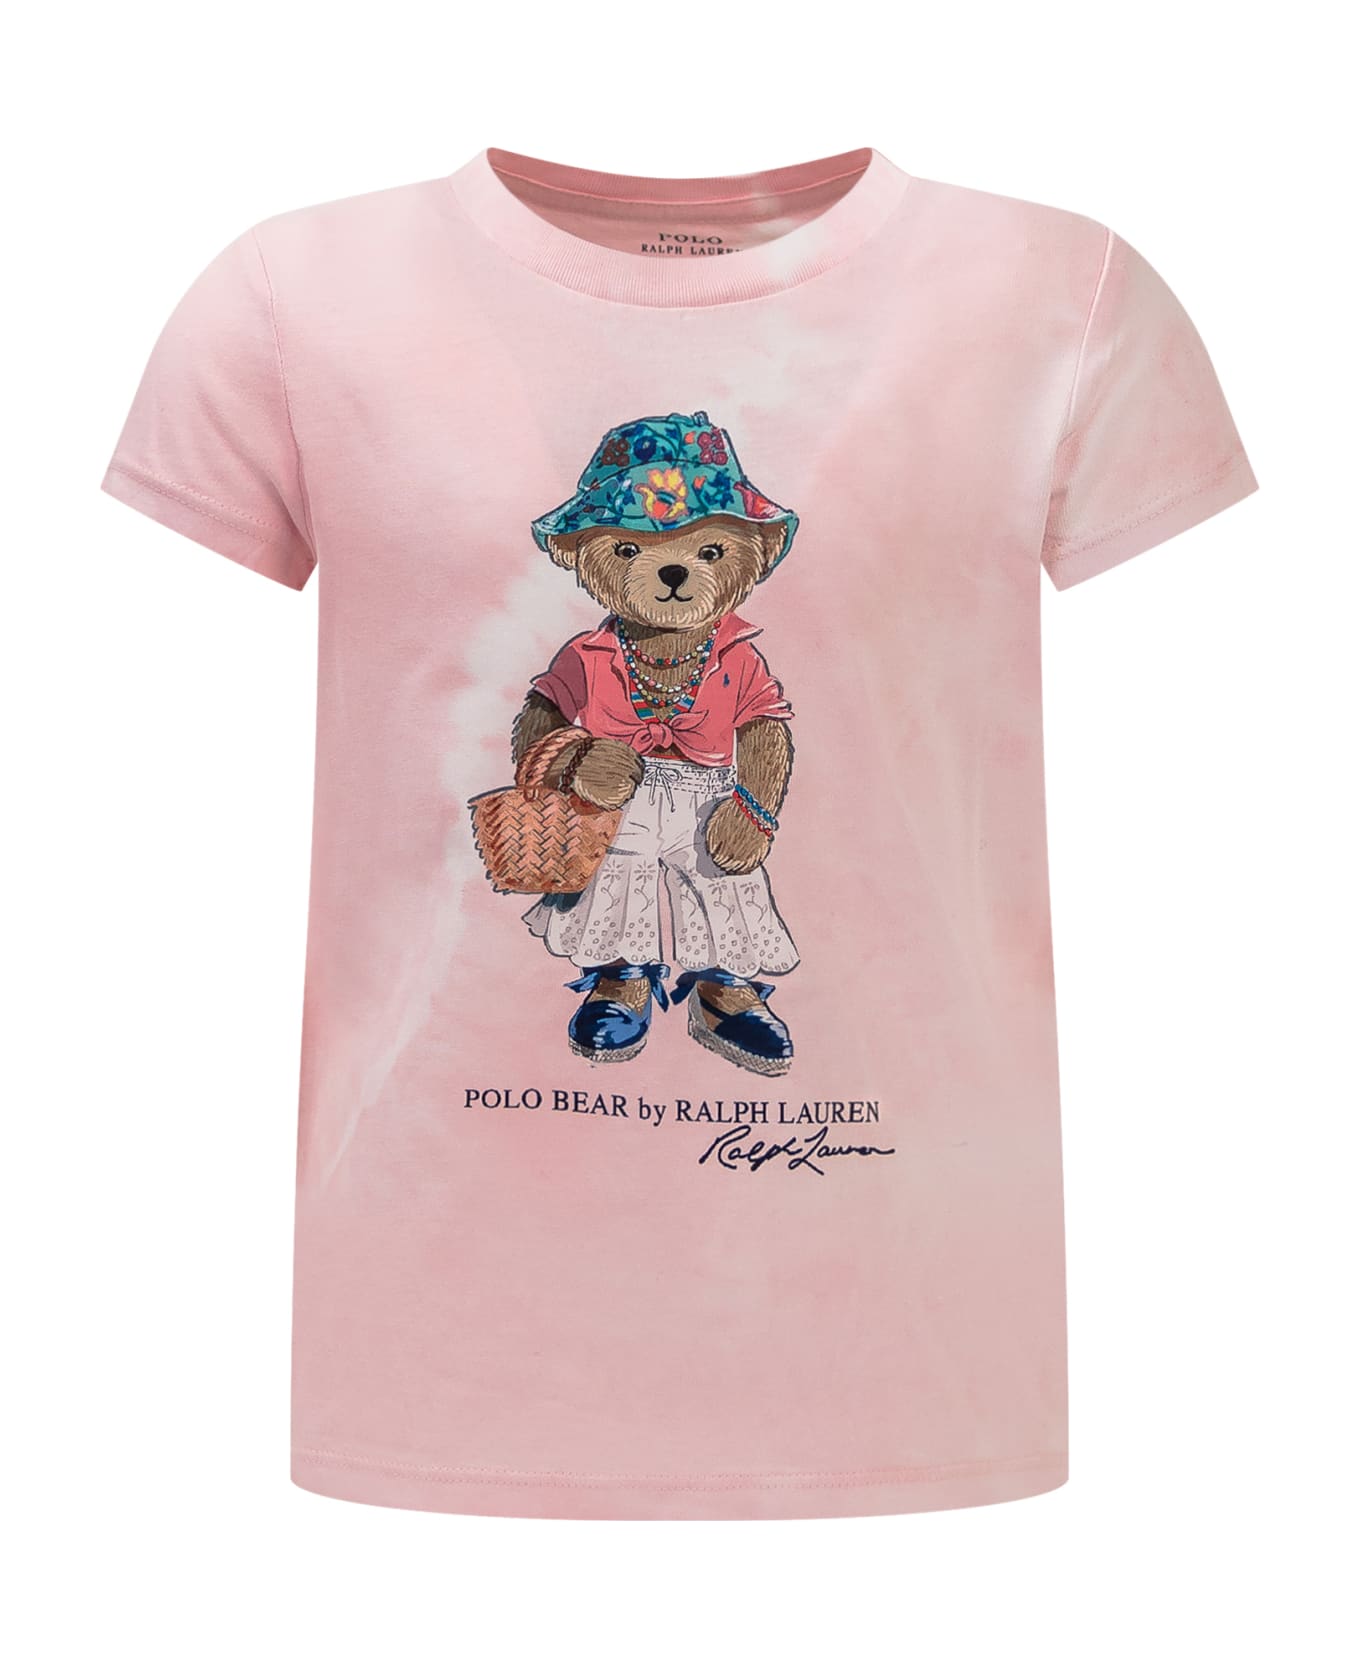 Polo Ralph Lauren Polo Bear T-shirt - HINT OF PINK TIE DYE